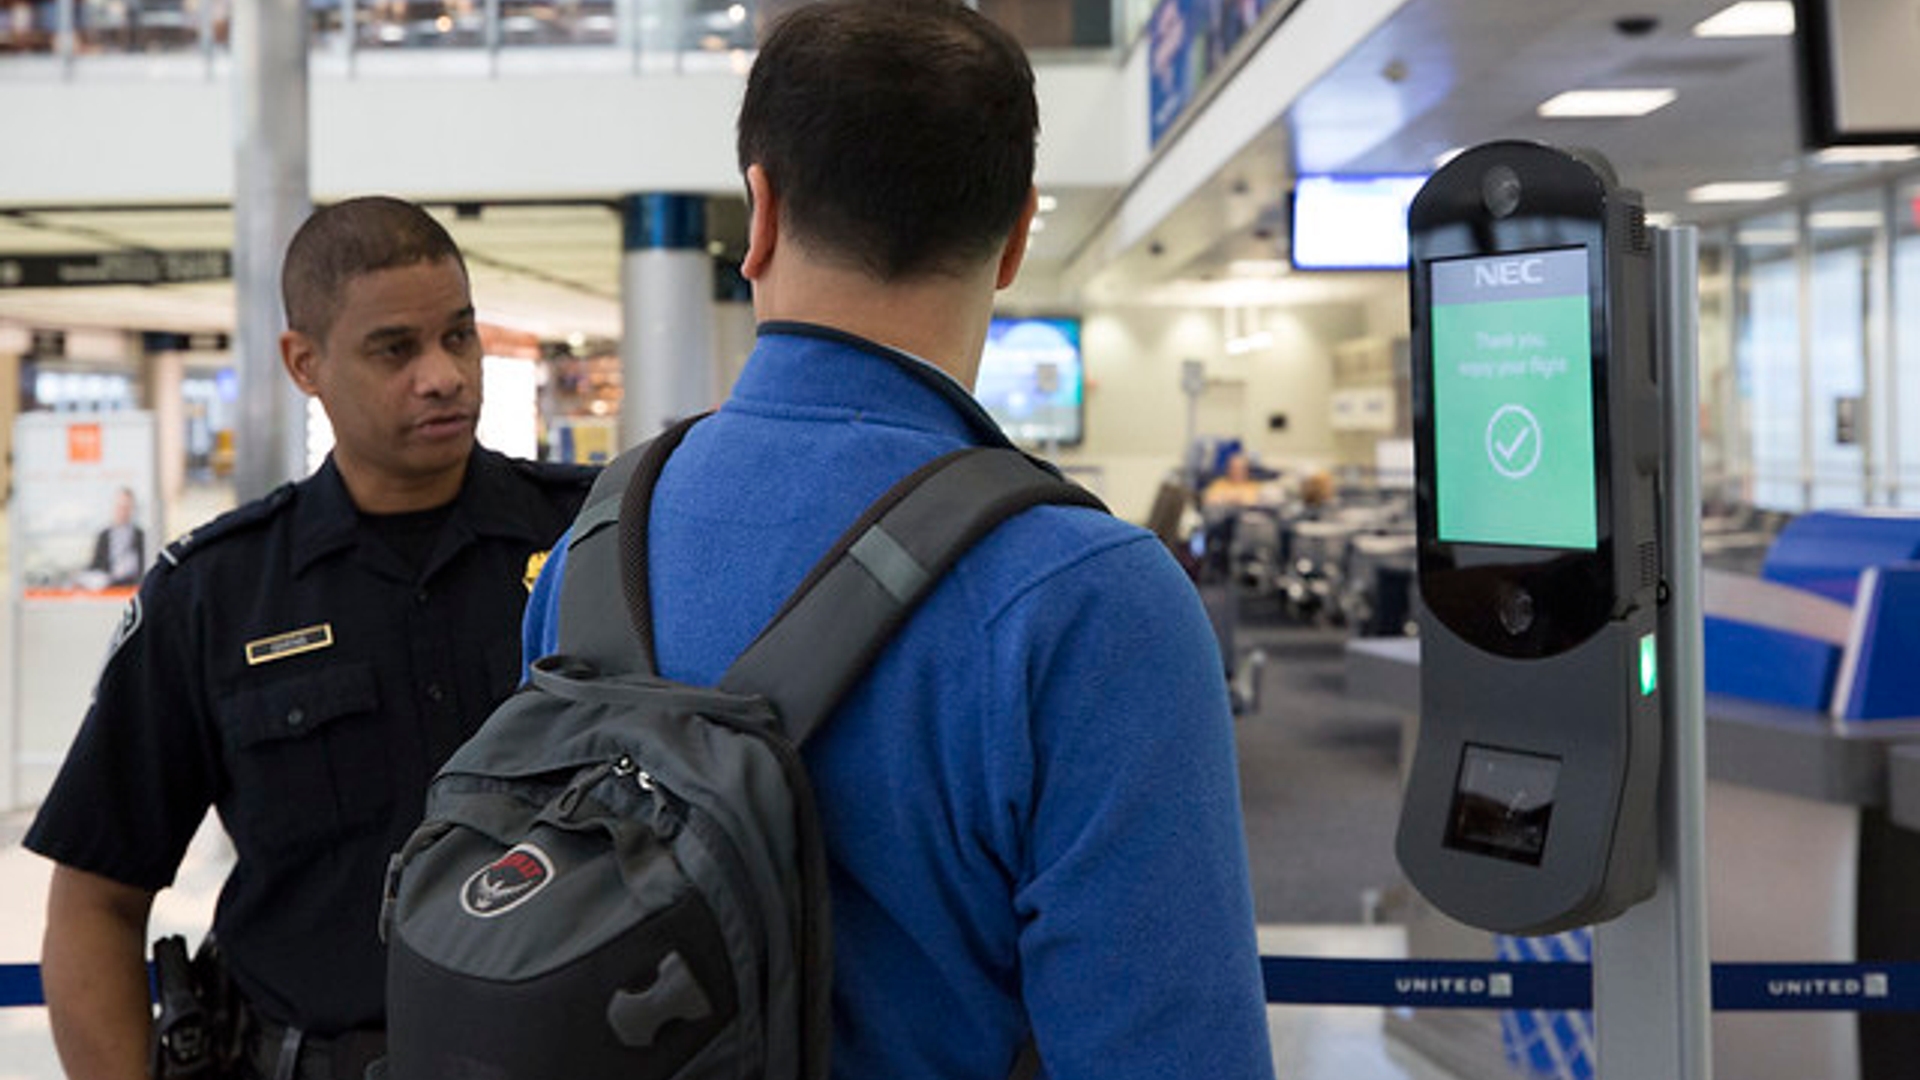 IAH Houston Airport Biometrics and CBP Operations